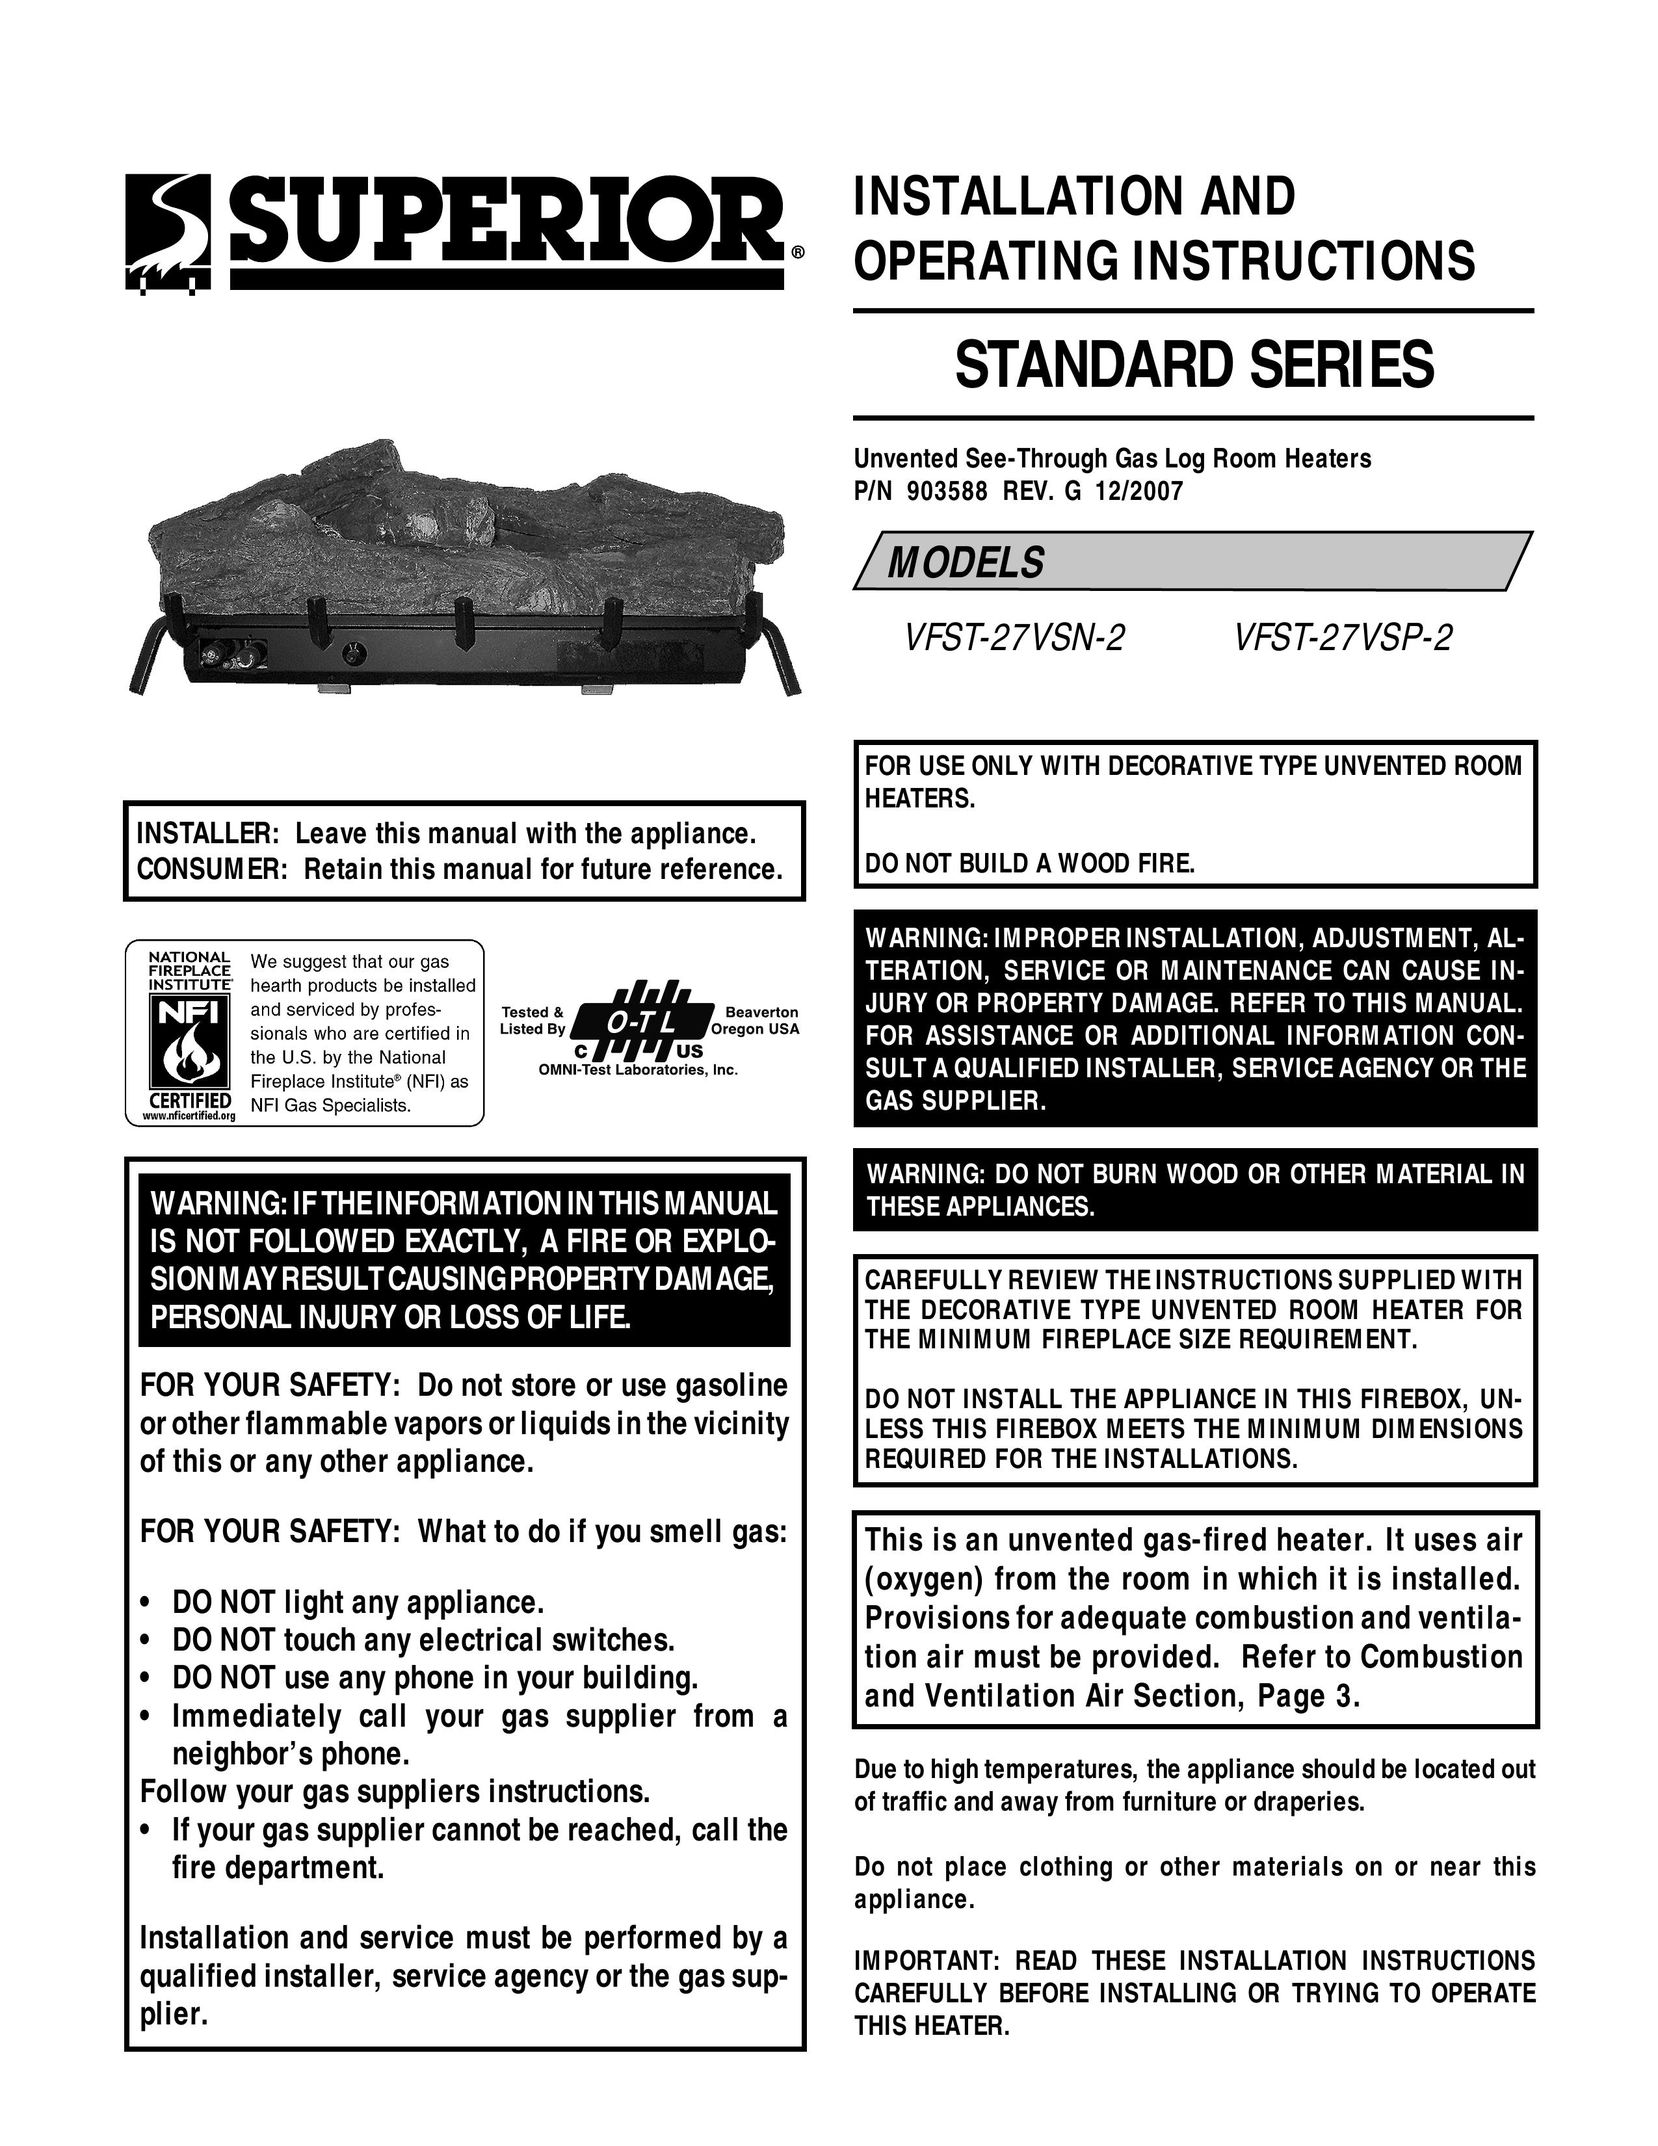 Superior VFST-27VSP-2 Gas Heater User Manual